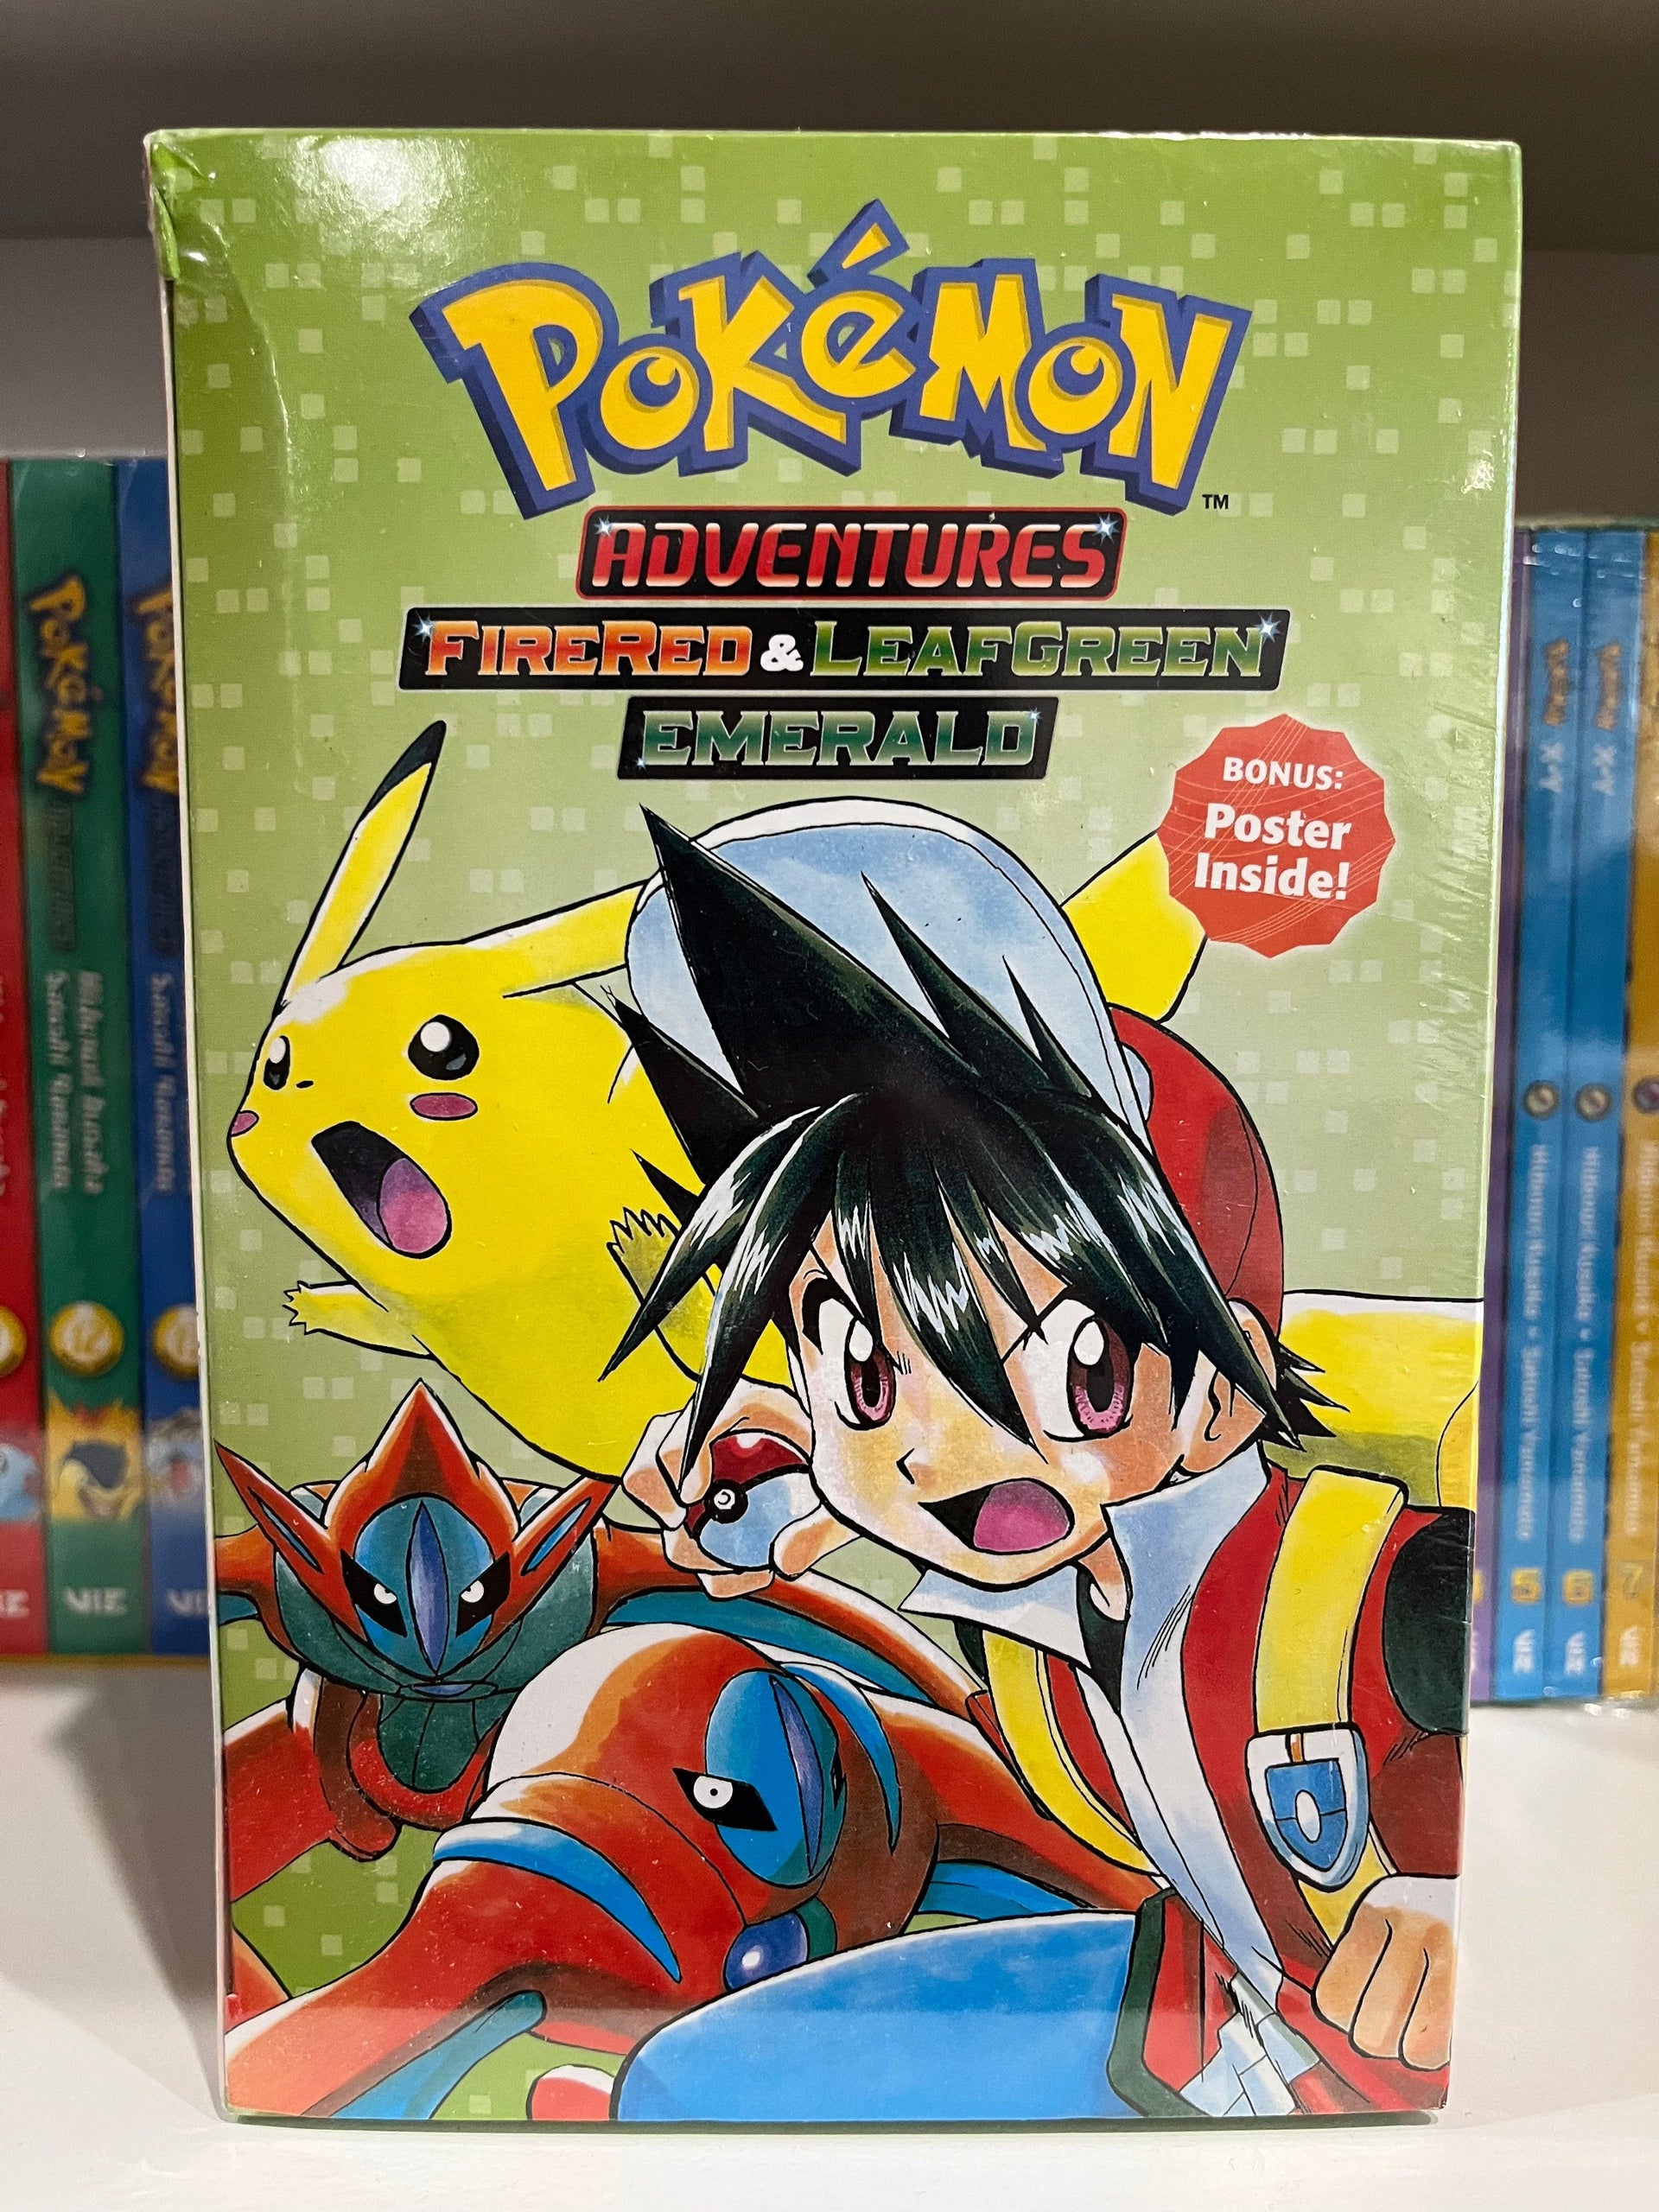 Books Kinokuniya: Pokémon Adventures FireRed & LeafGreen / Emerald